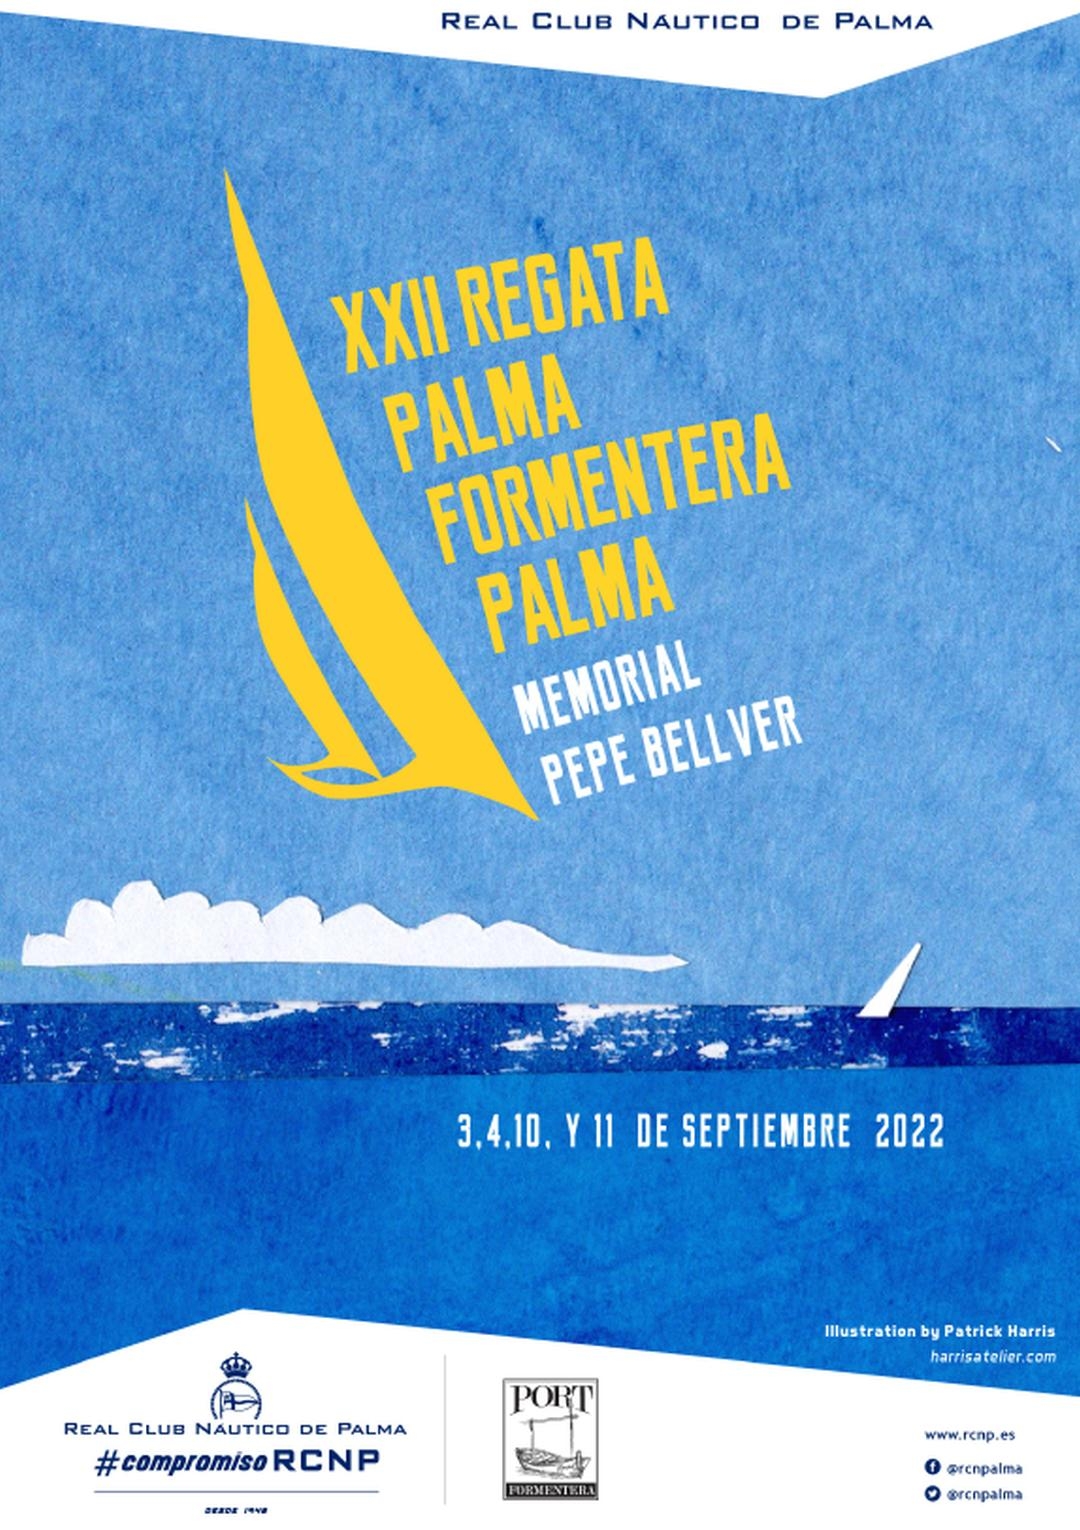 XXII Palma - Formentera: Memorial PEPE BELLVER